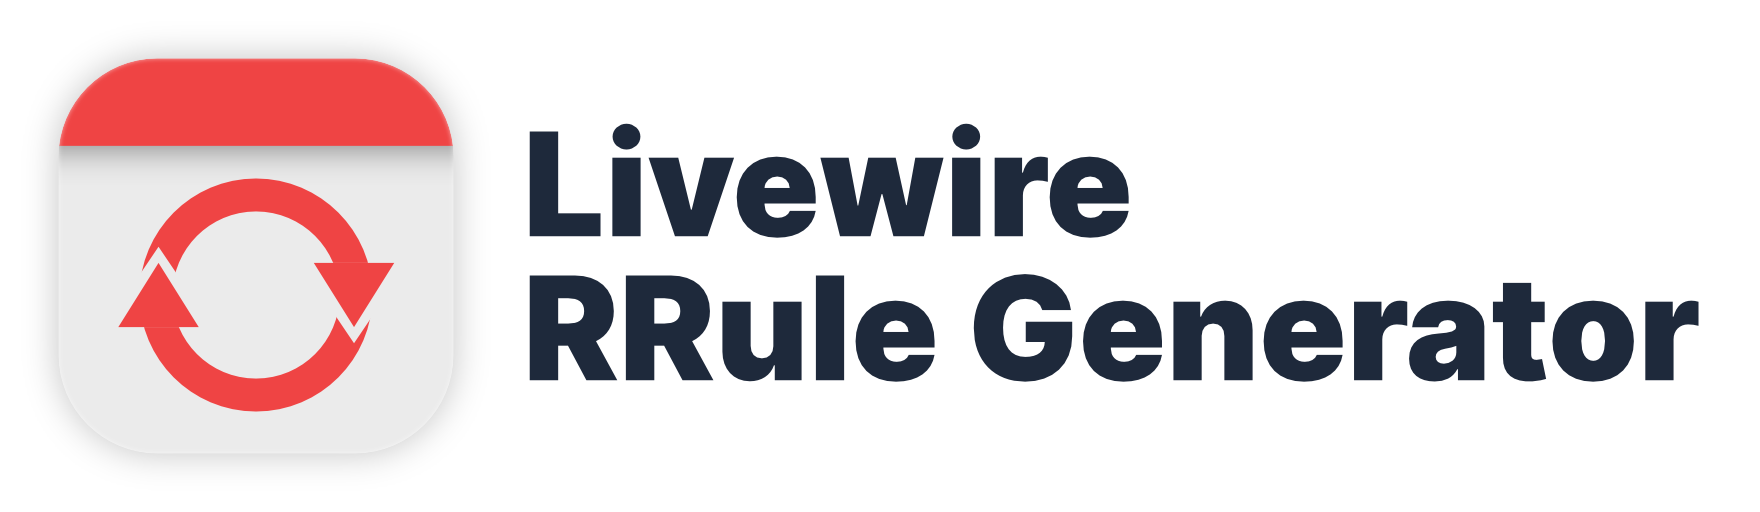 Livewire RRule Generator